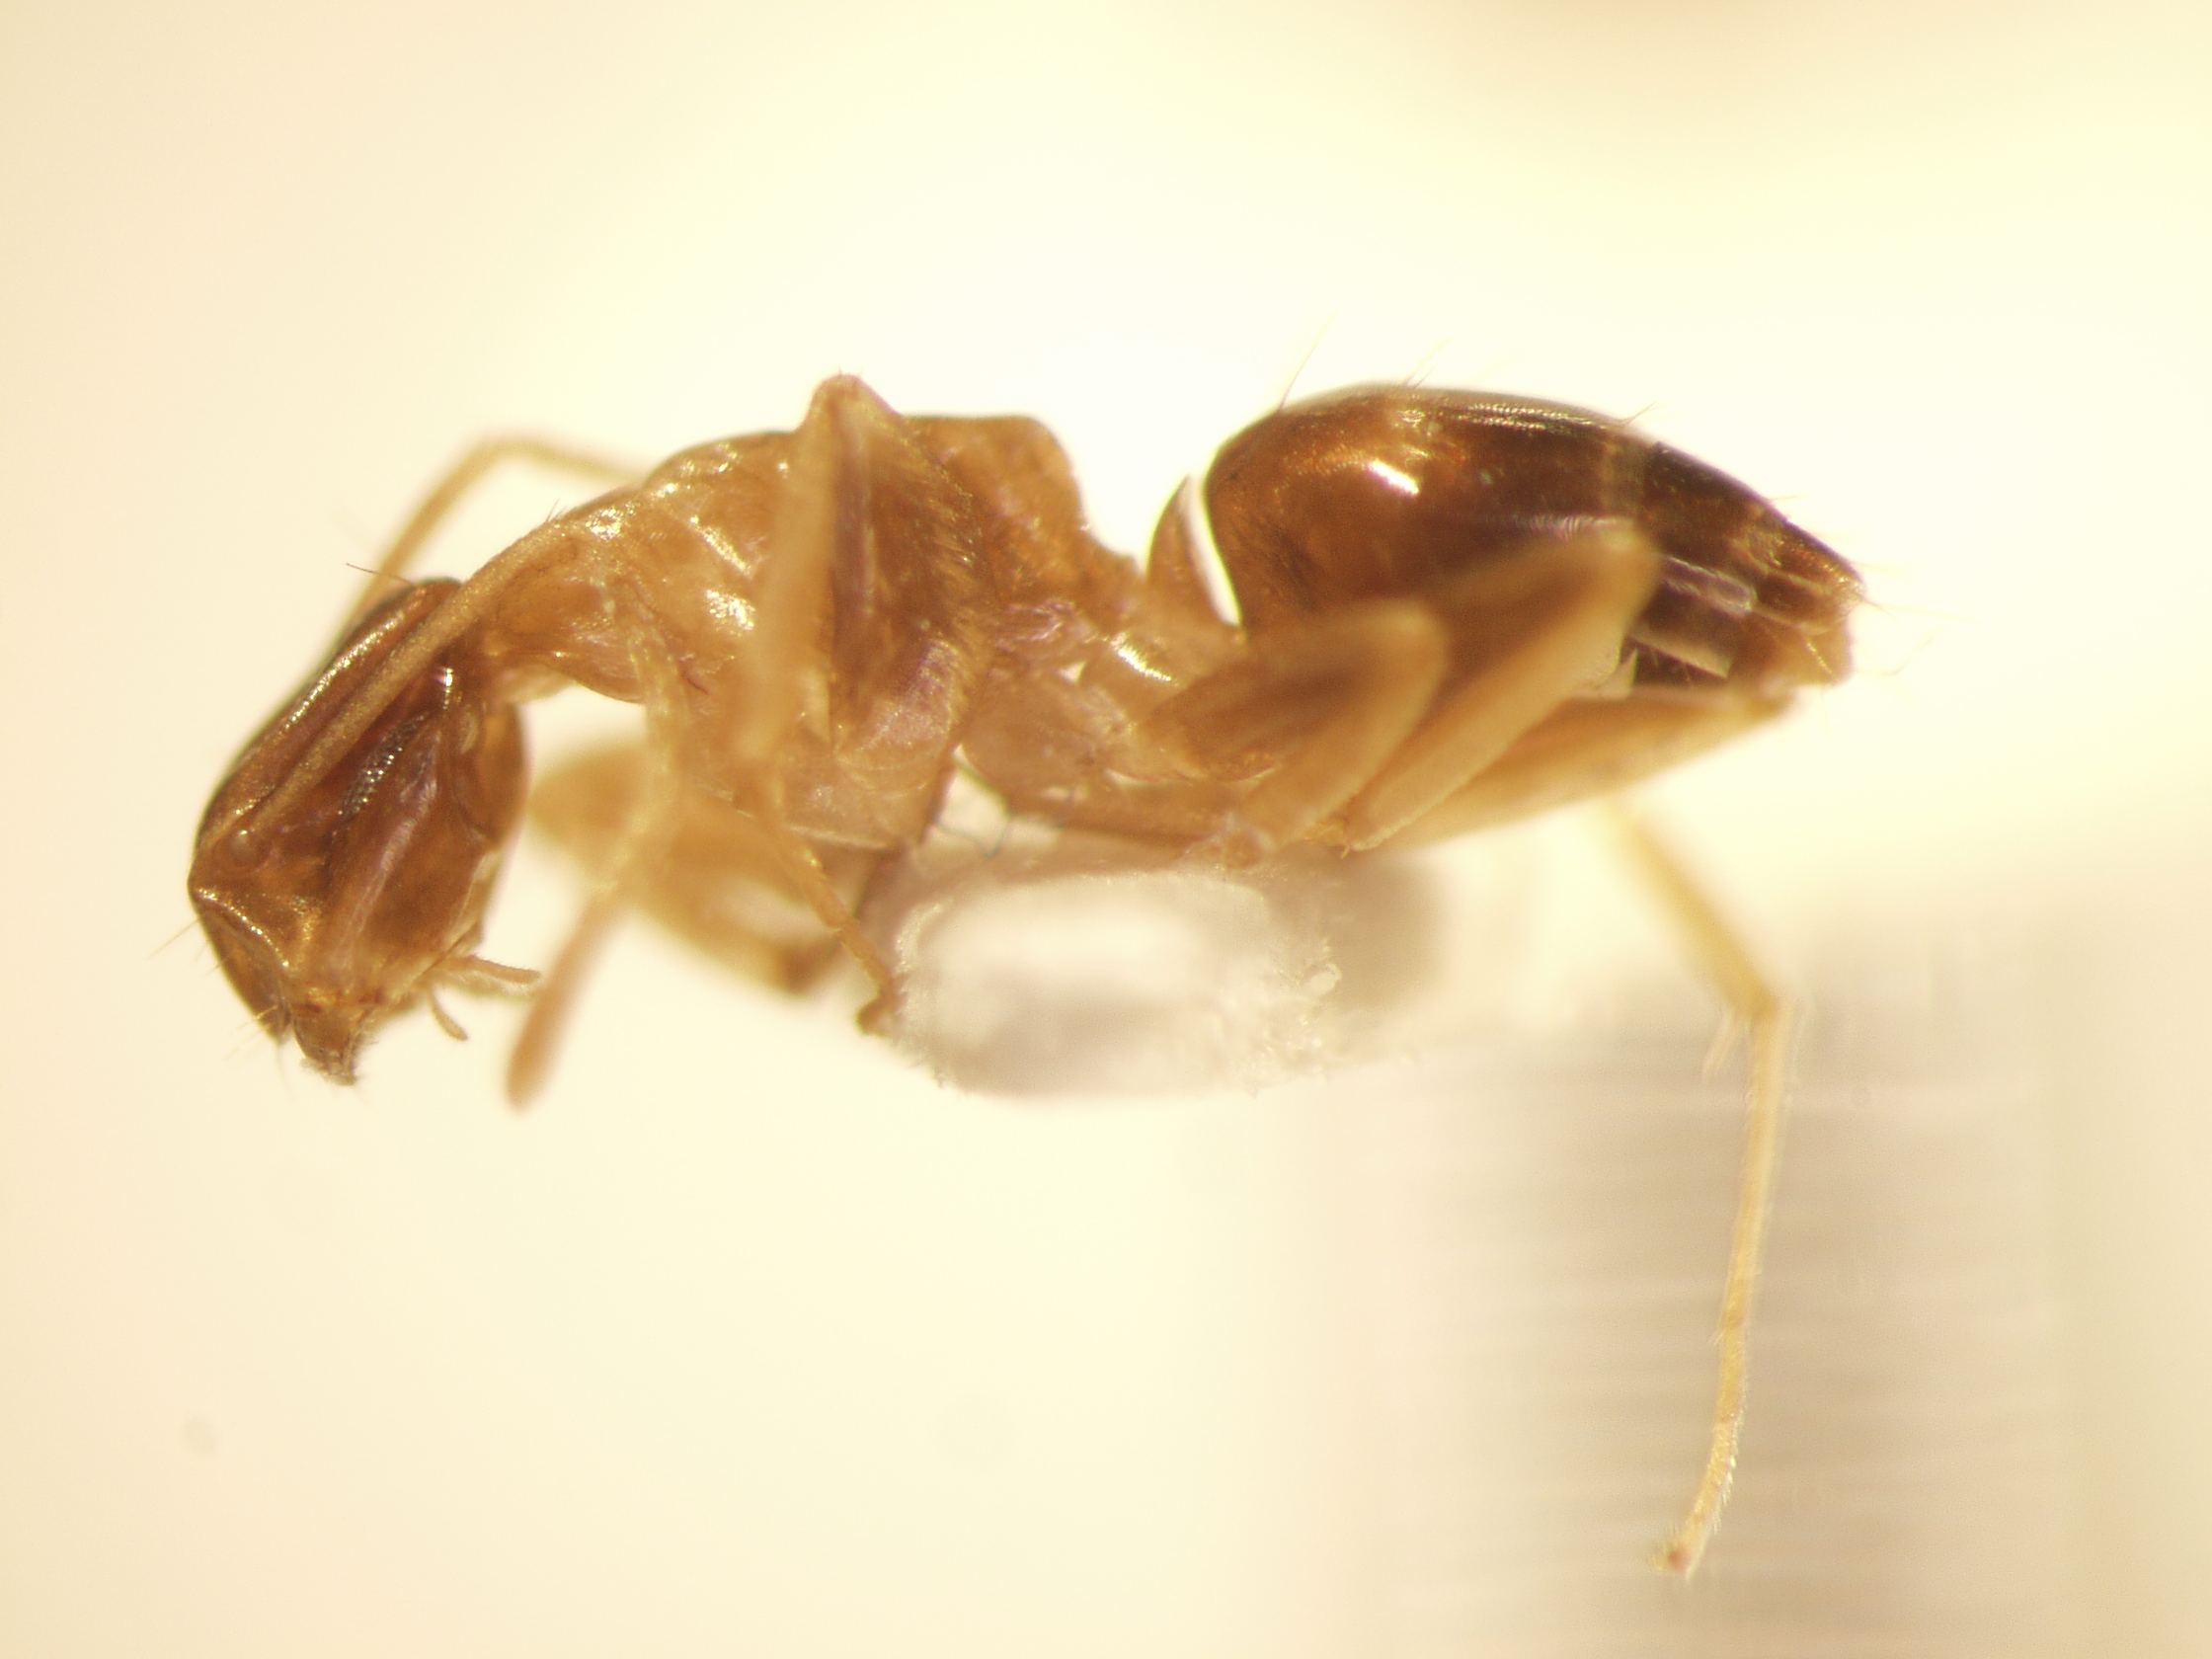 Camponotus 52 lateral